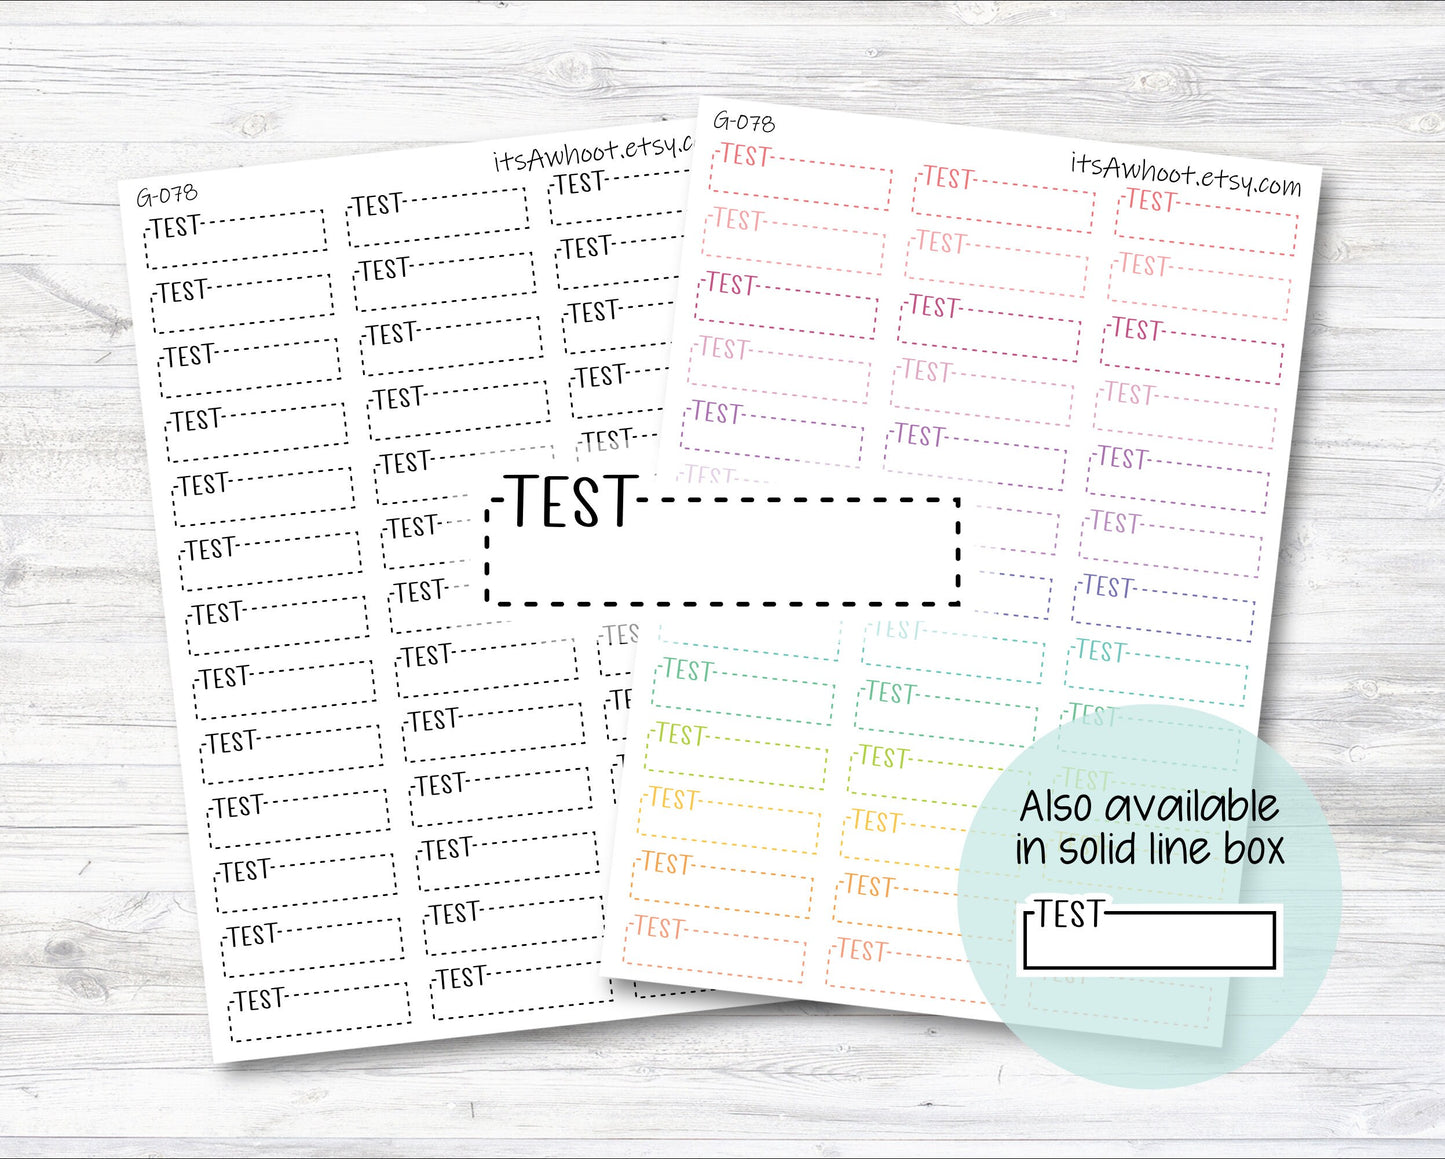 Test Quarter Box Label Planner Stickers - Dash or Solid (G078)